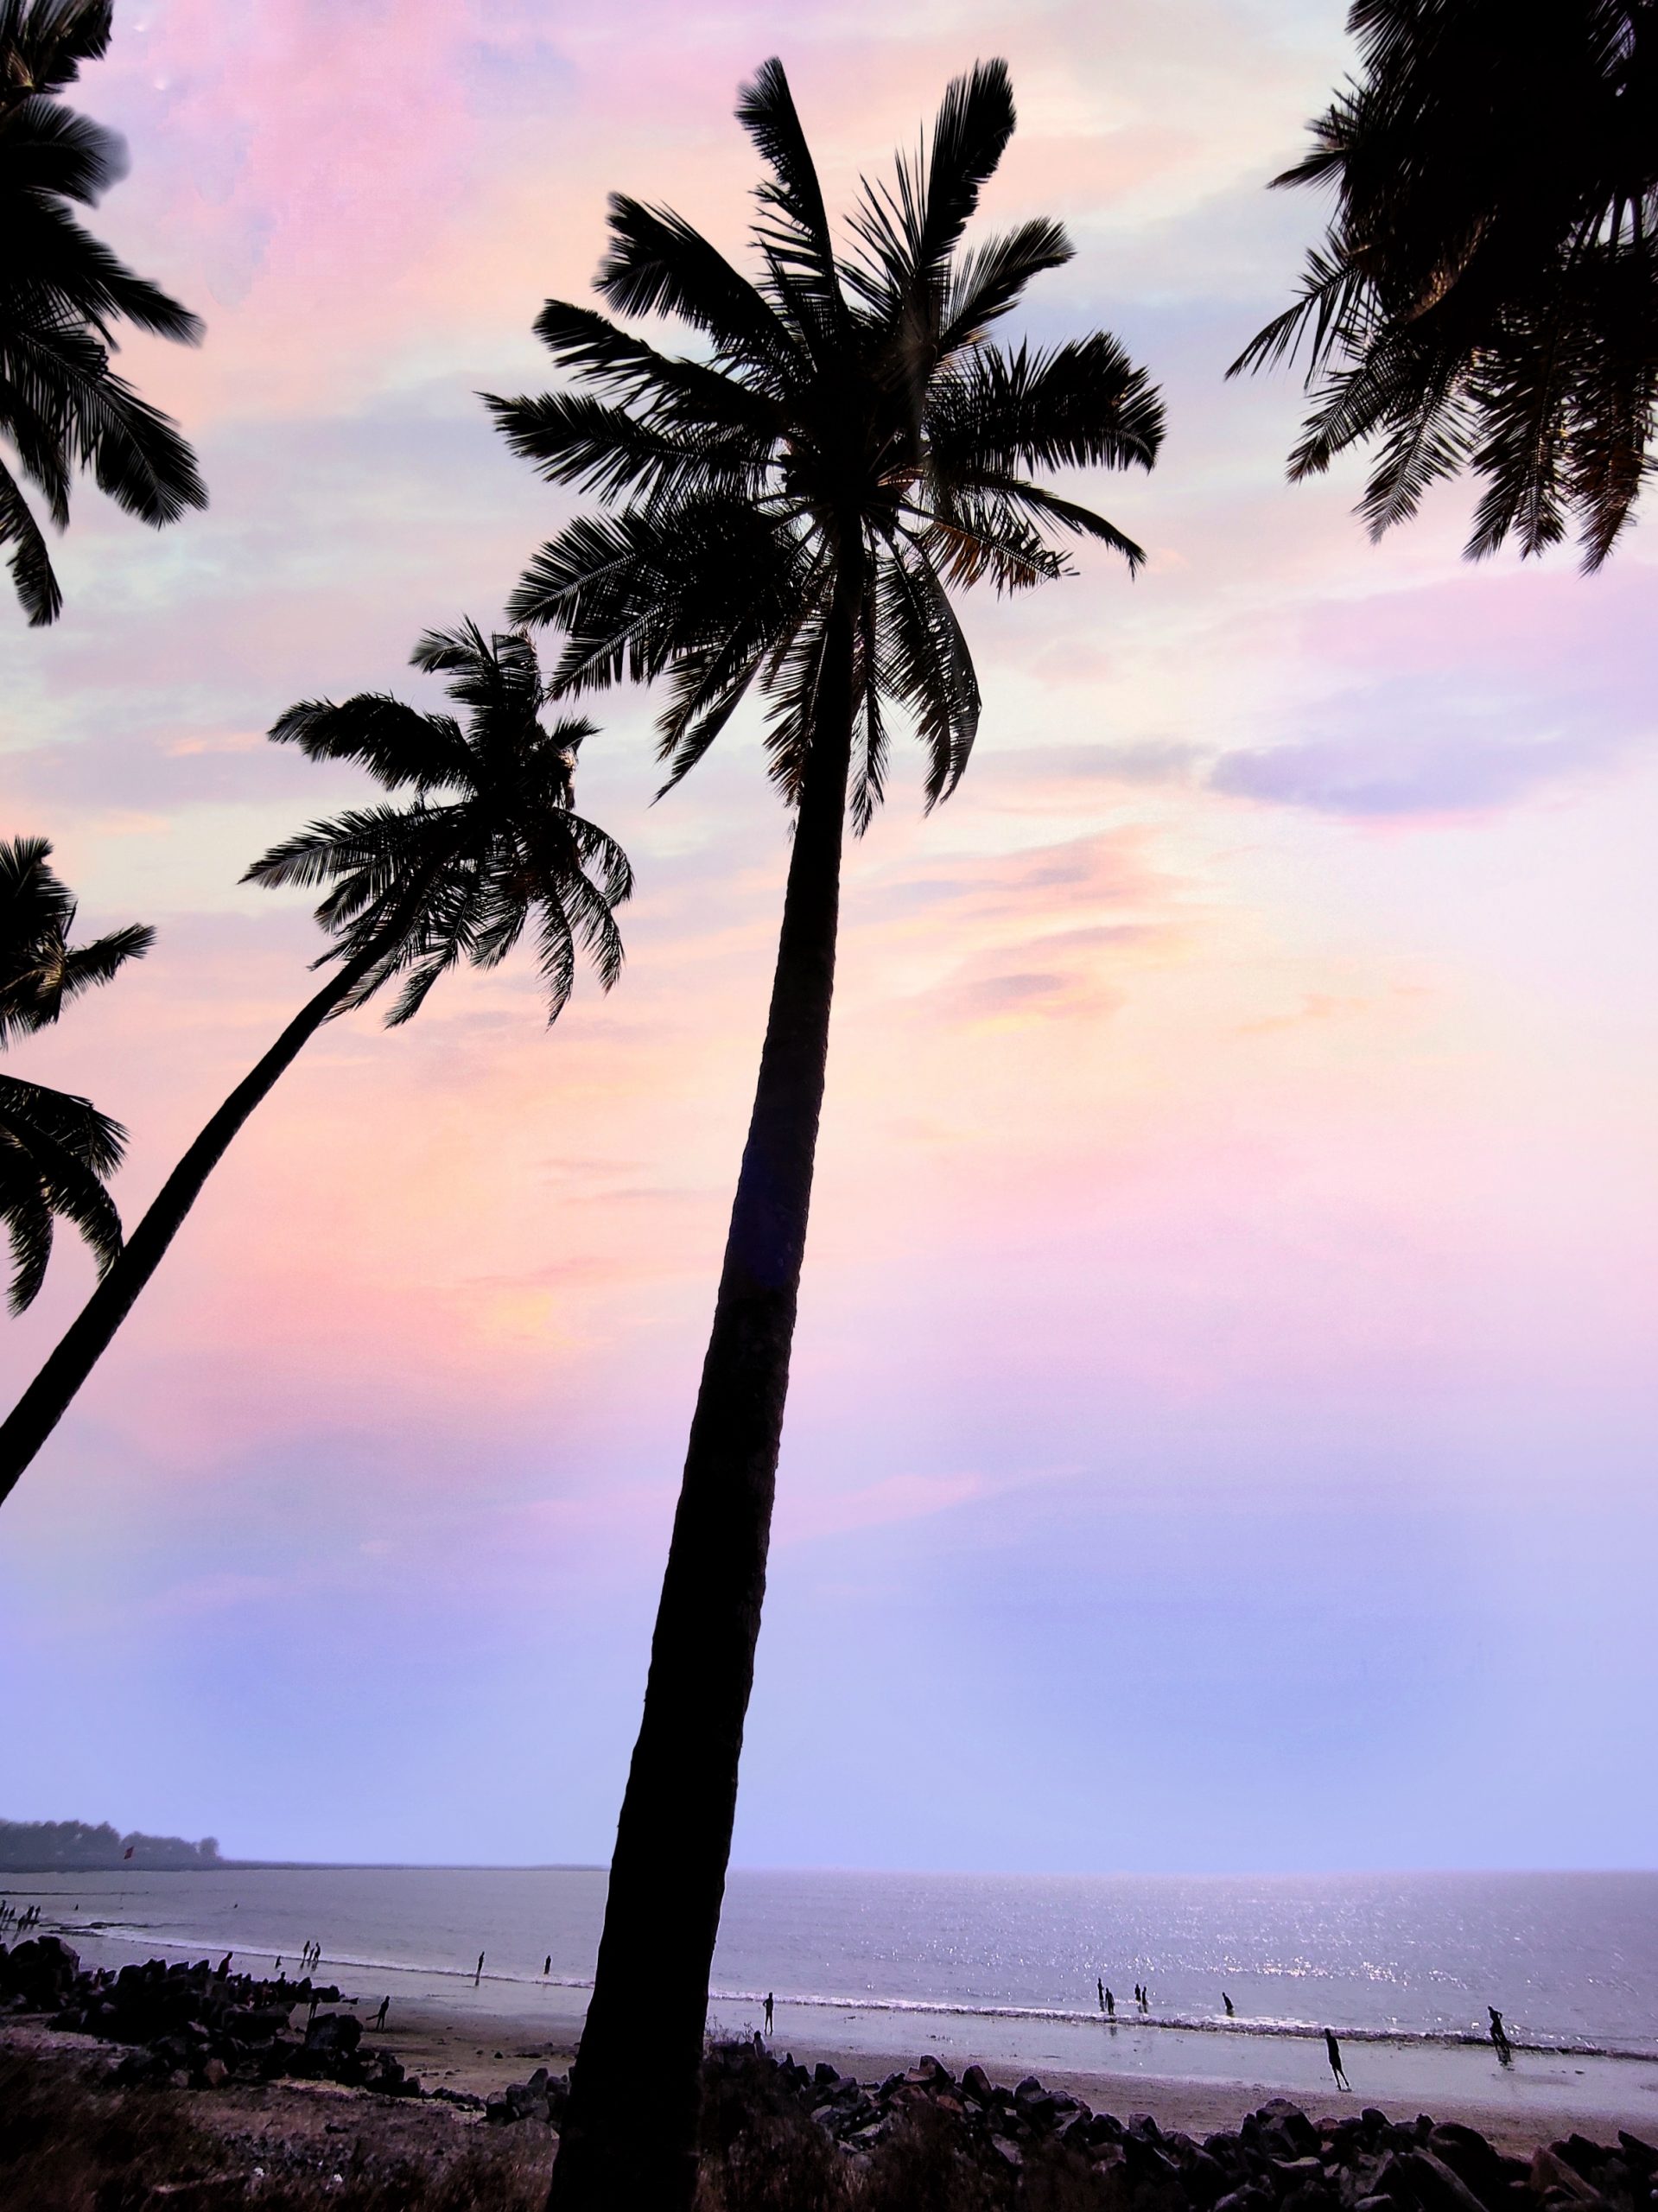 Palm trees near a sea